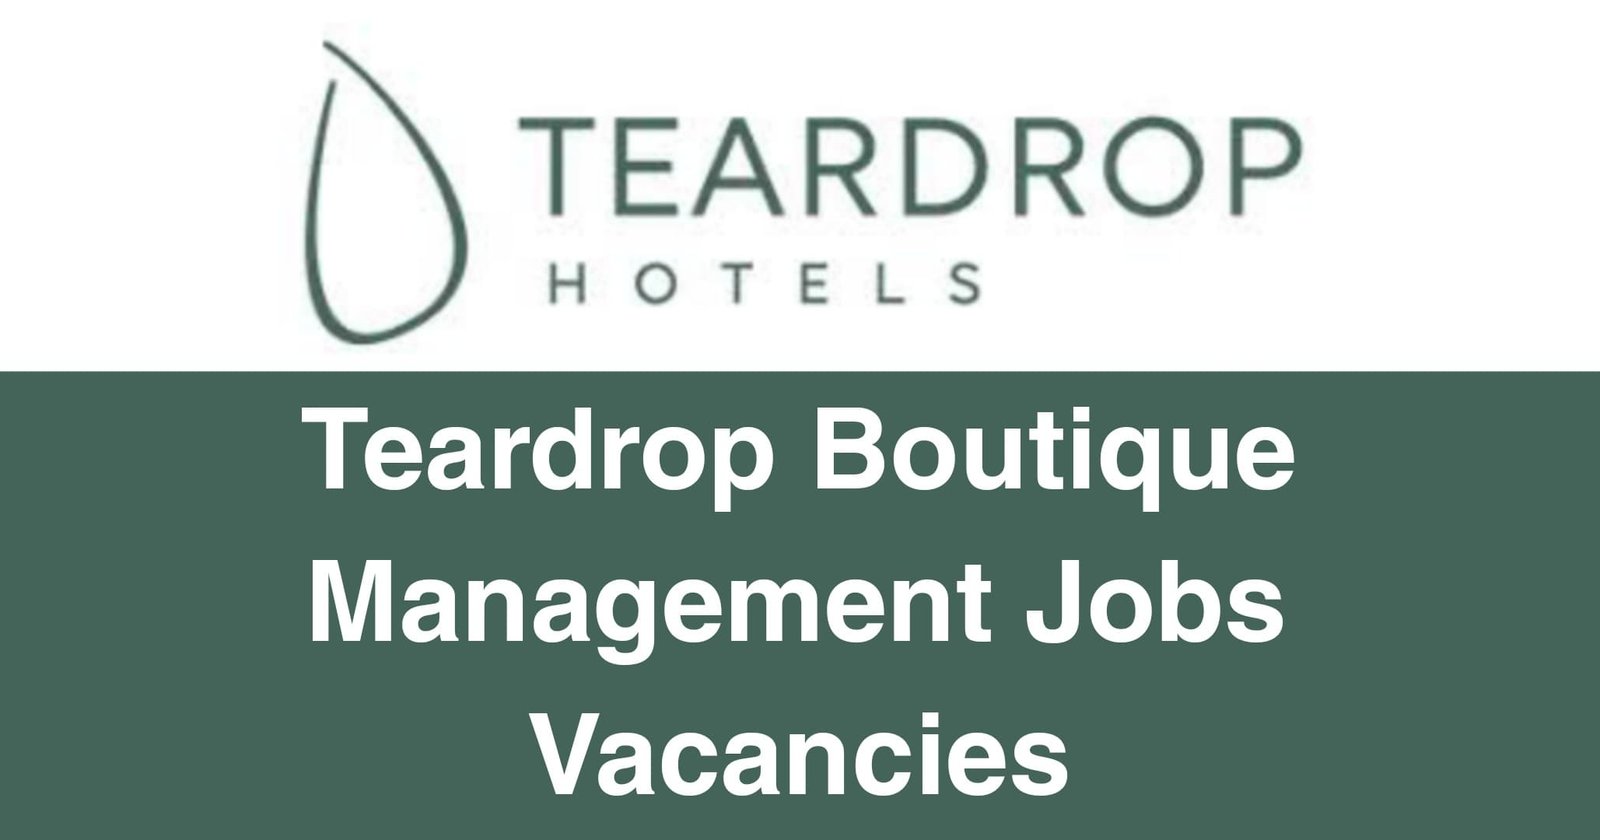 Teardrop Boutique Management Jobs Vacancies